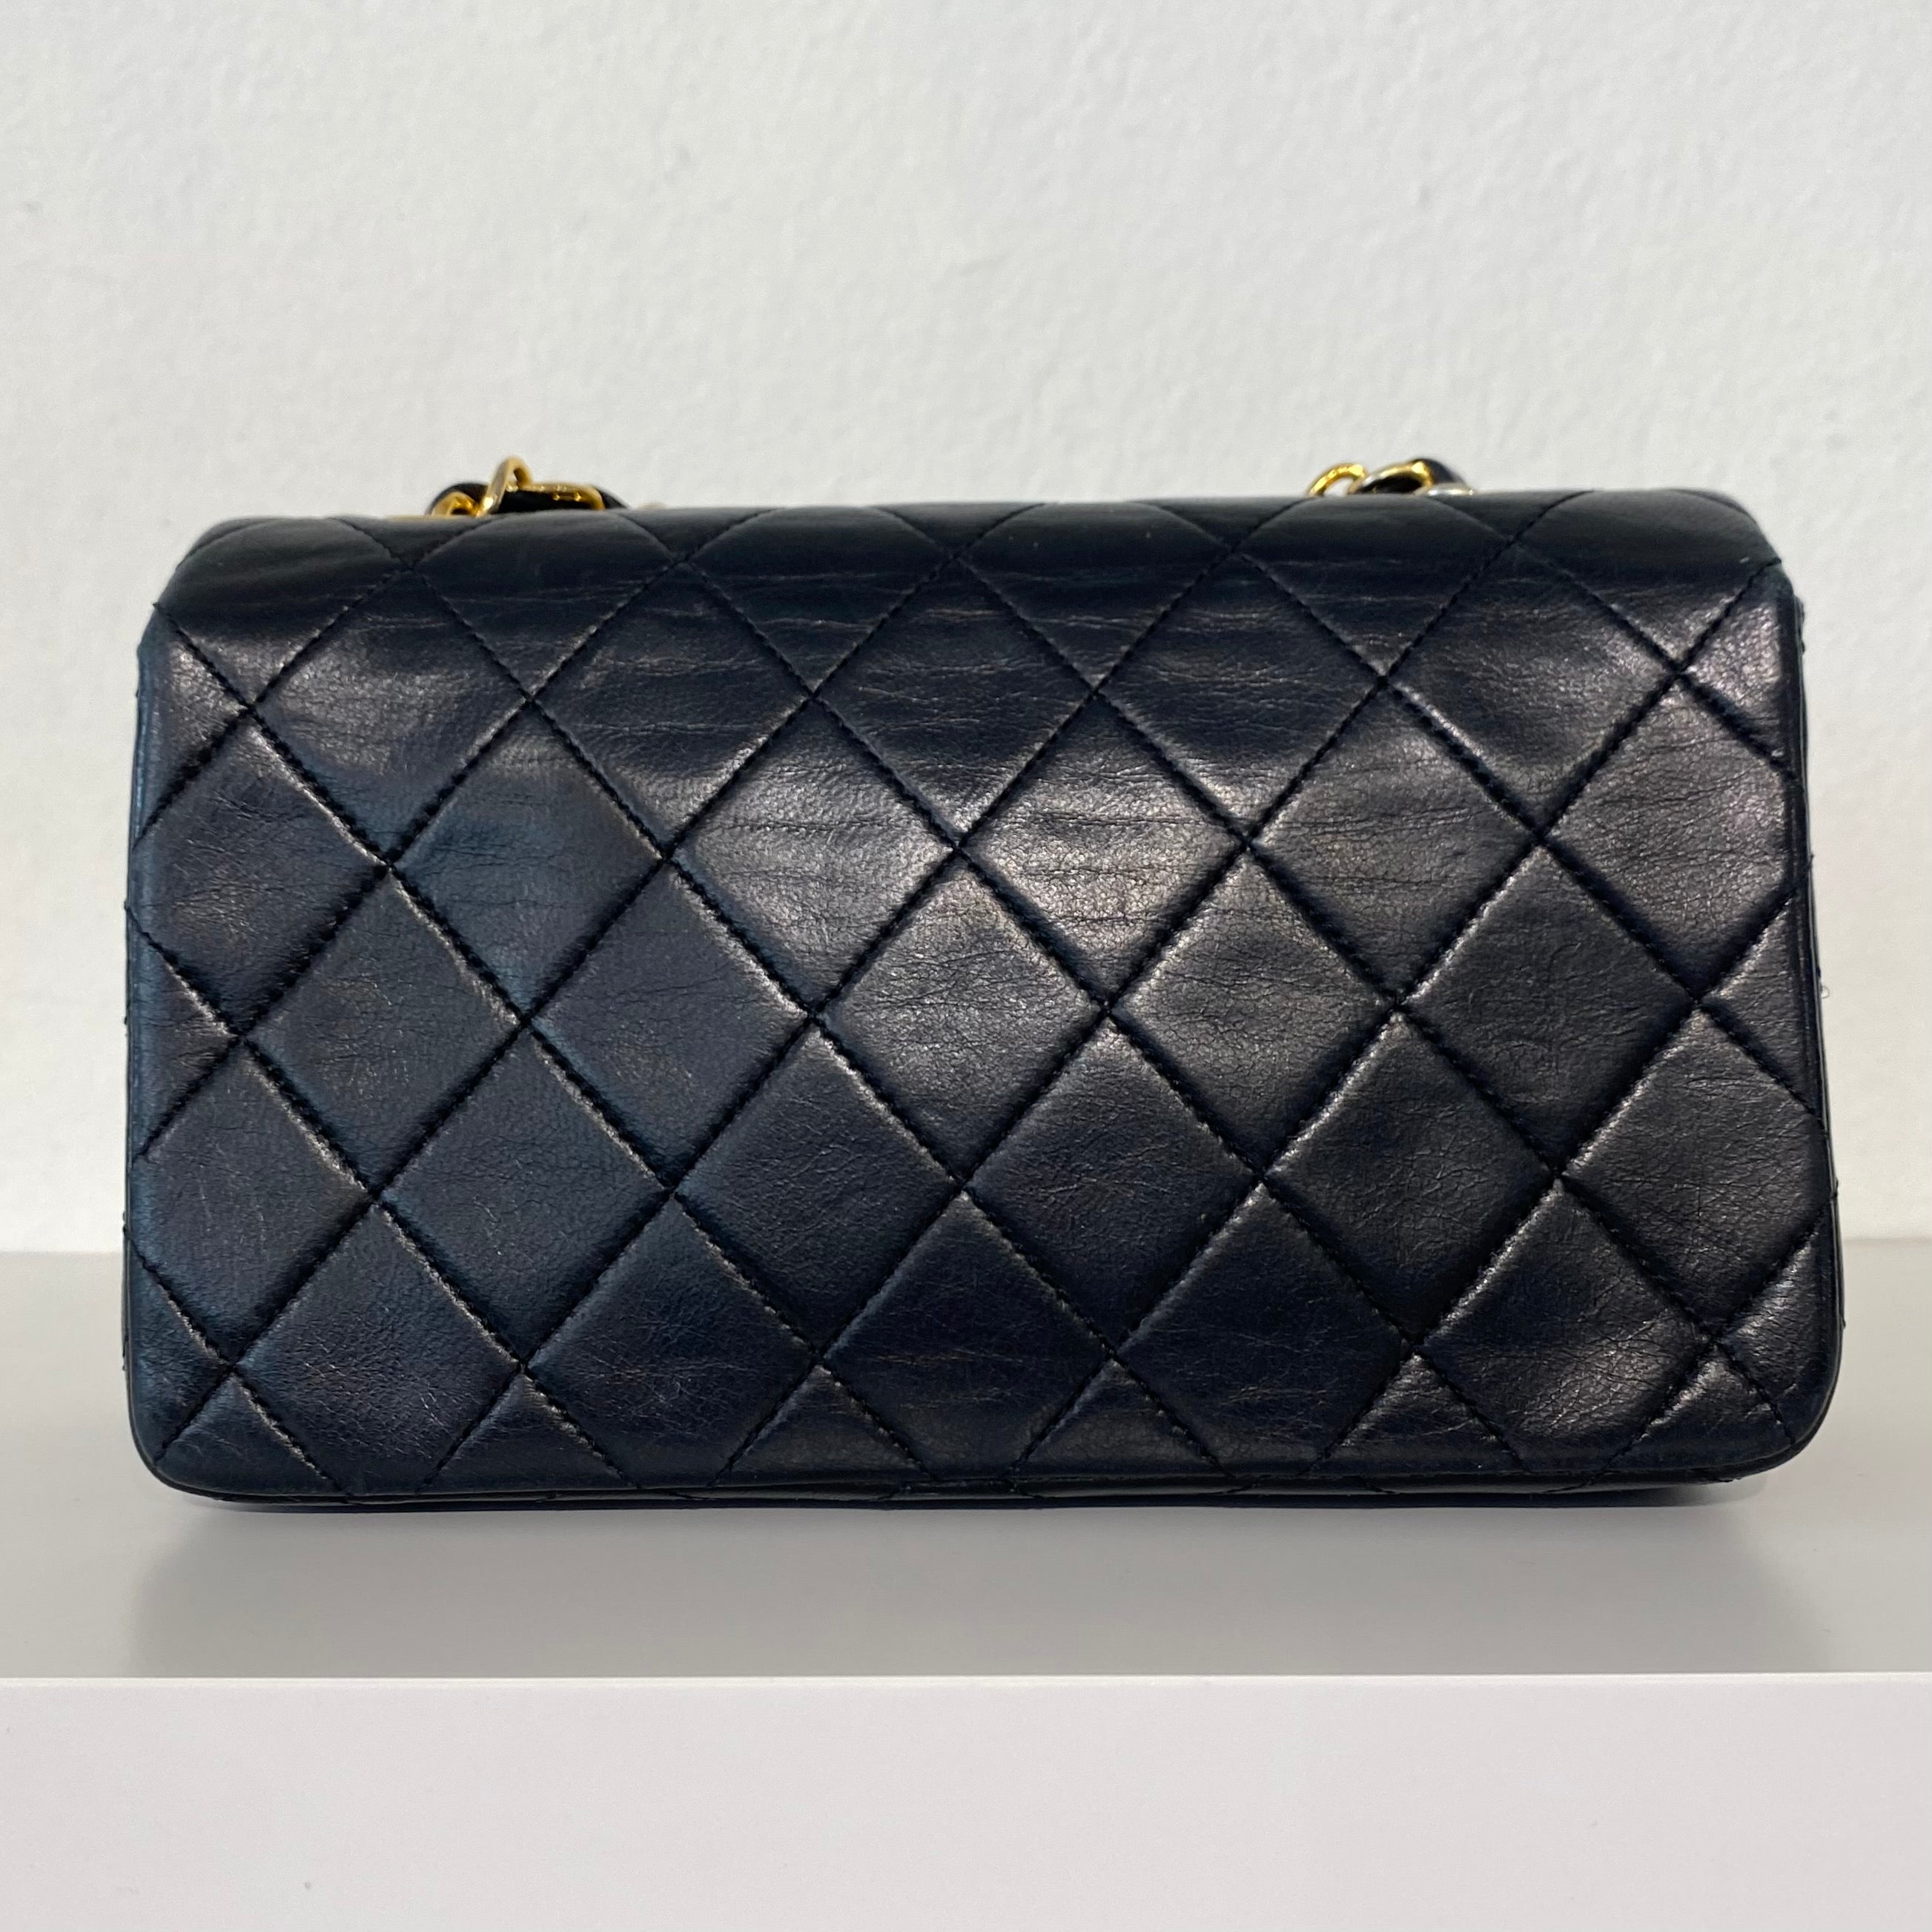 Chanel Classic Vintage Medium Quilted Leather Flap Shoulder Bag - Midnight Blue/Black